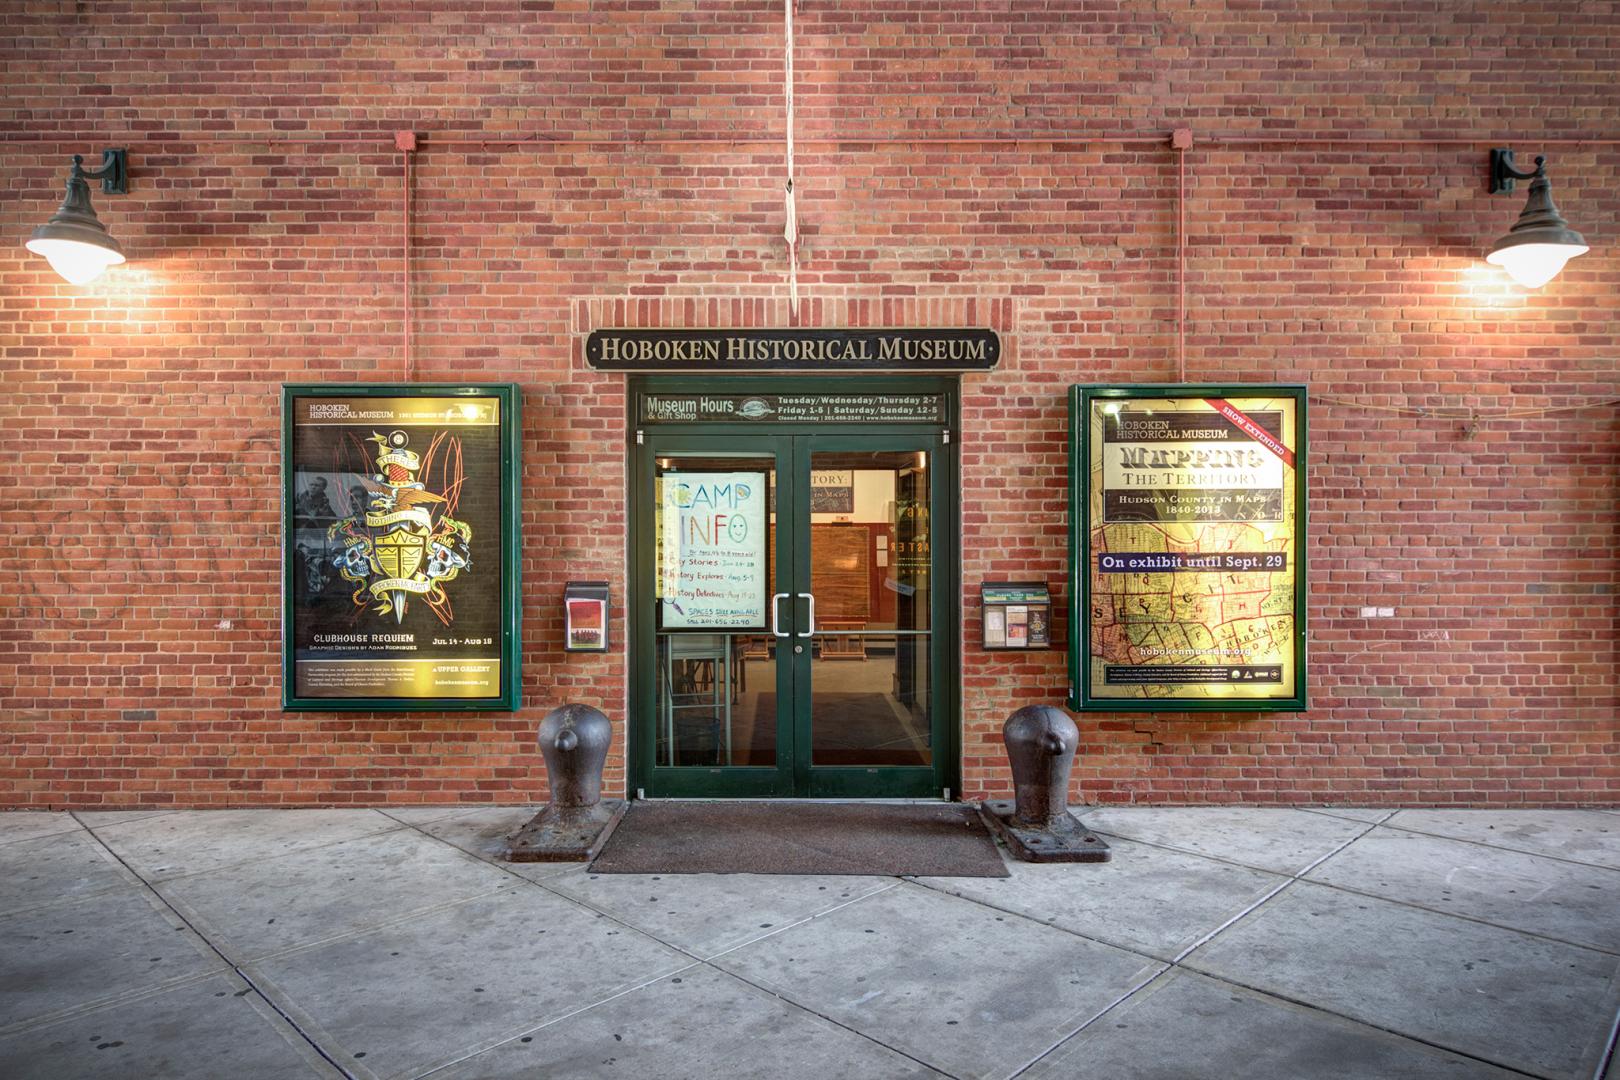 Hoboken Historical Museum venue image